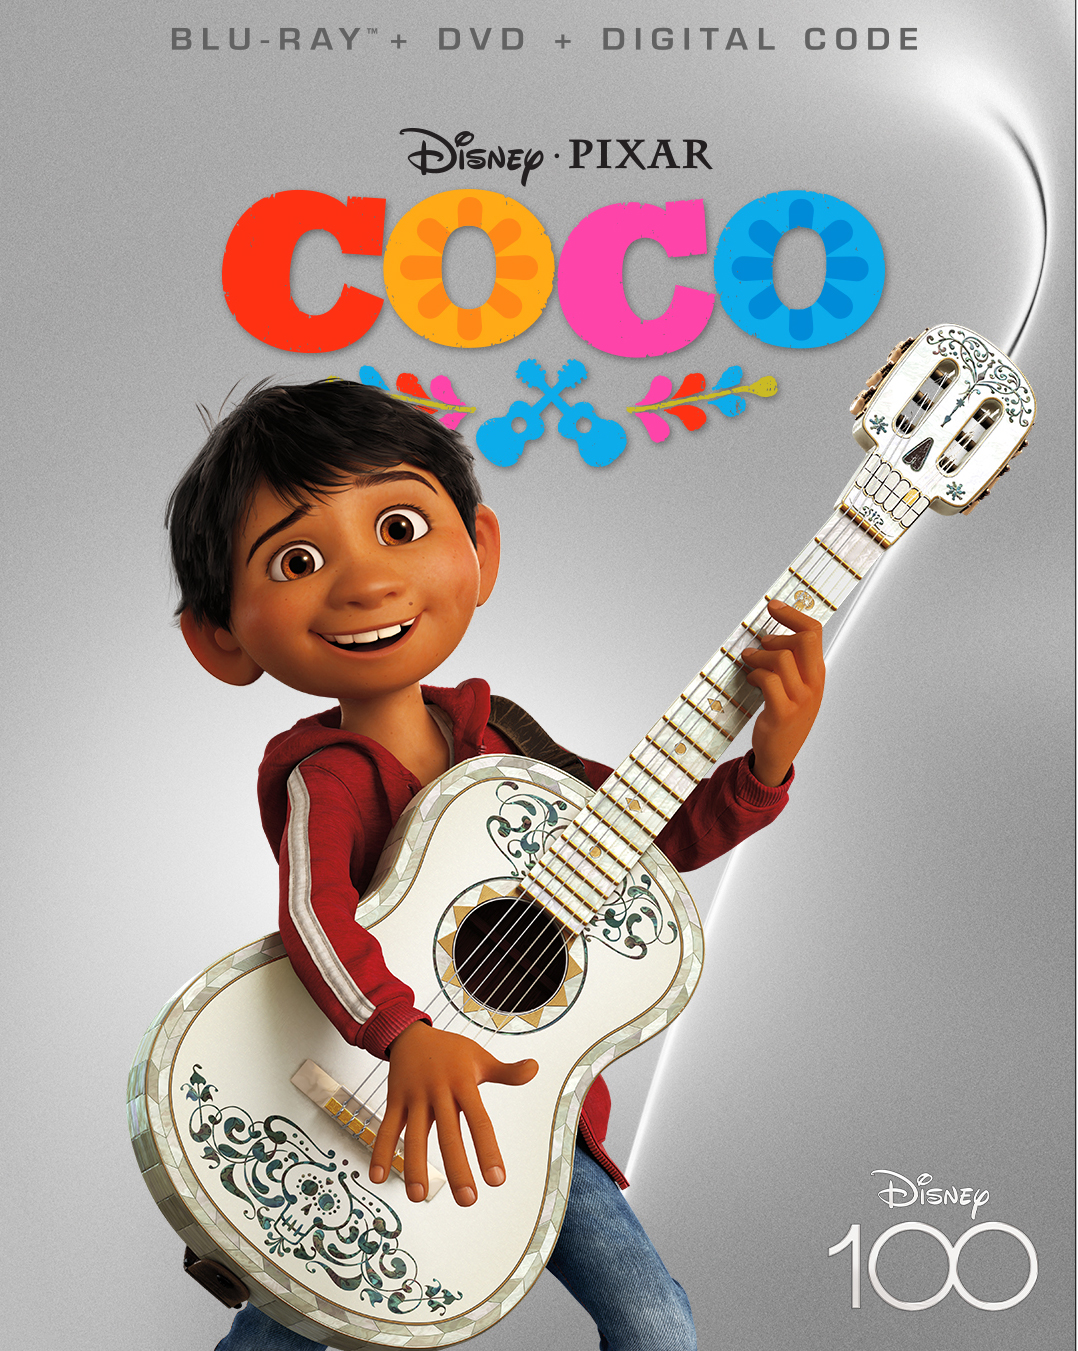 Coco Digital Copy] [Blu-ray/DVD] - Best Buy